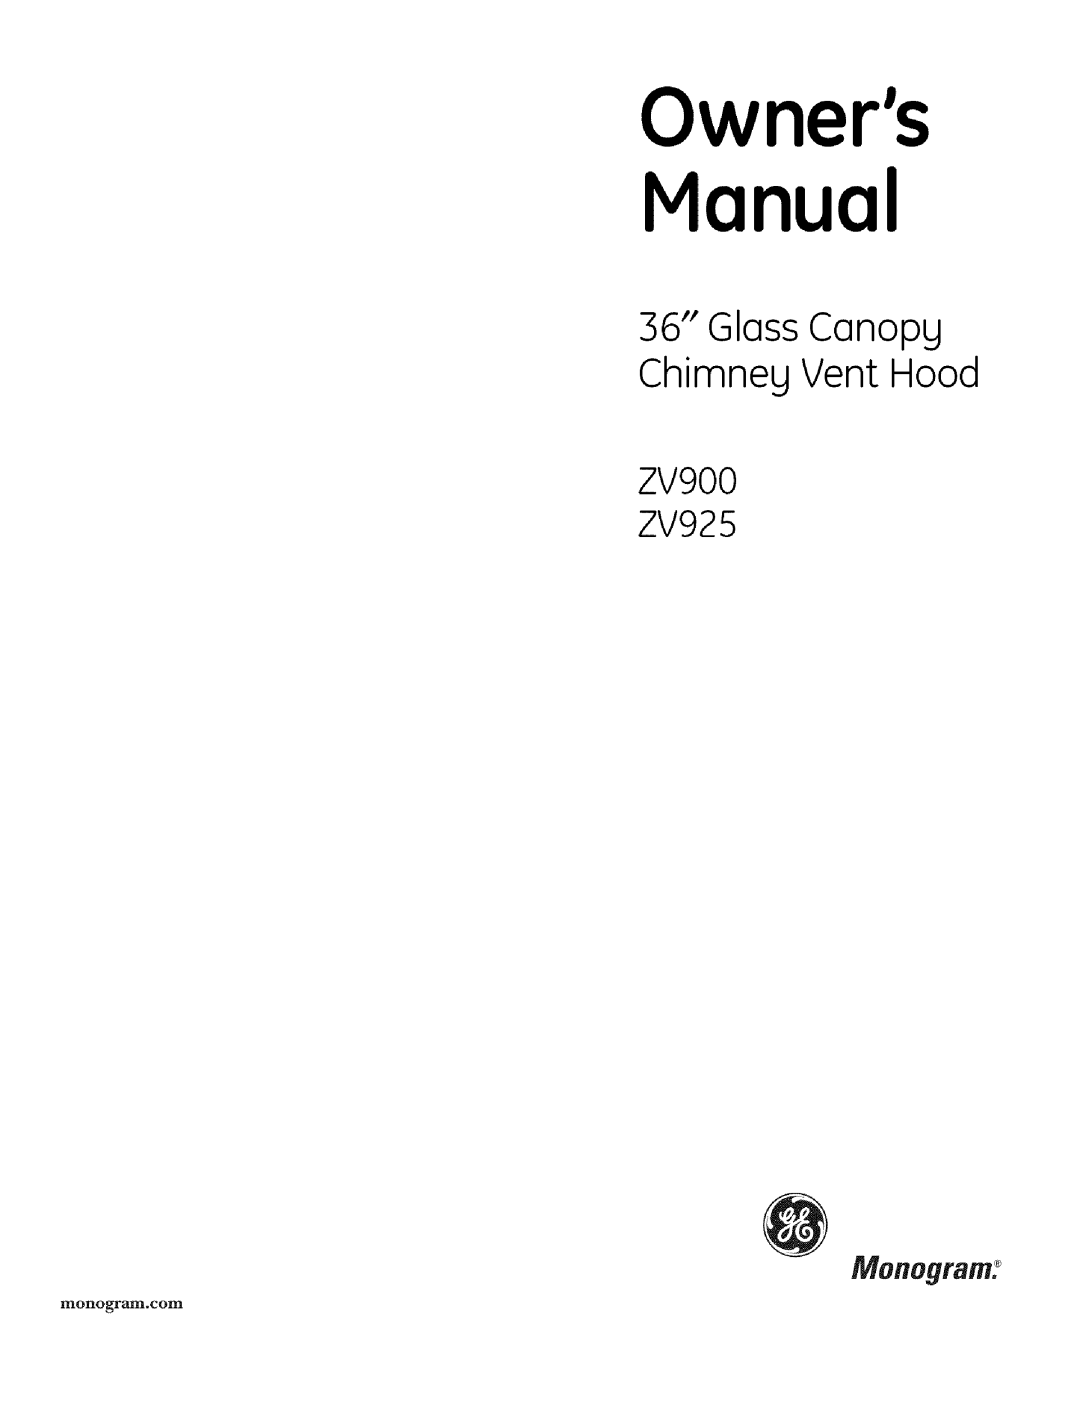 GE owner manual 36” Glass Canopy Chimney Vent Hood ZV900 ZV925, 49-80403-4 